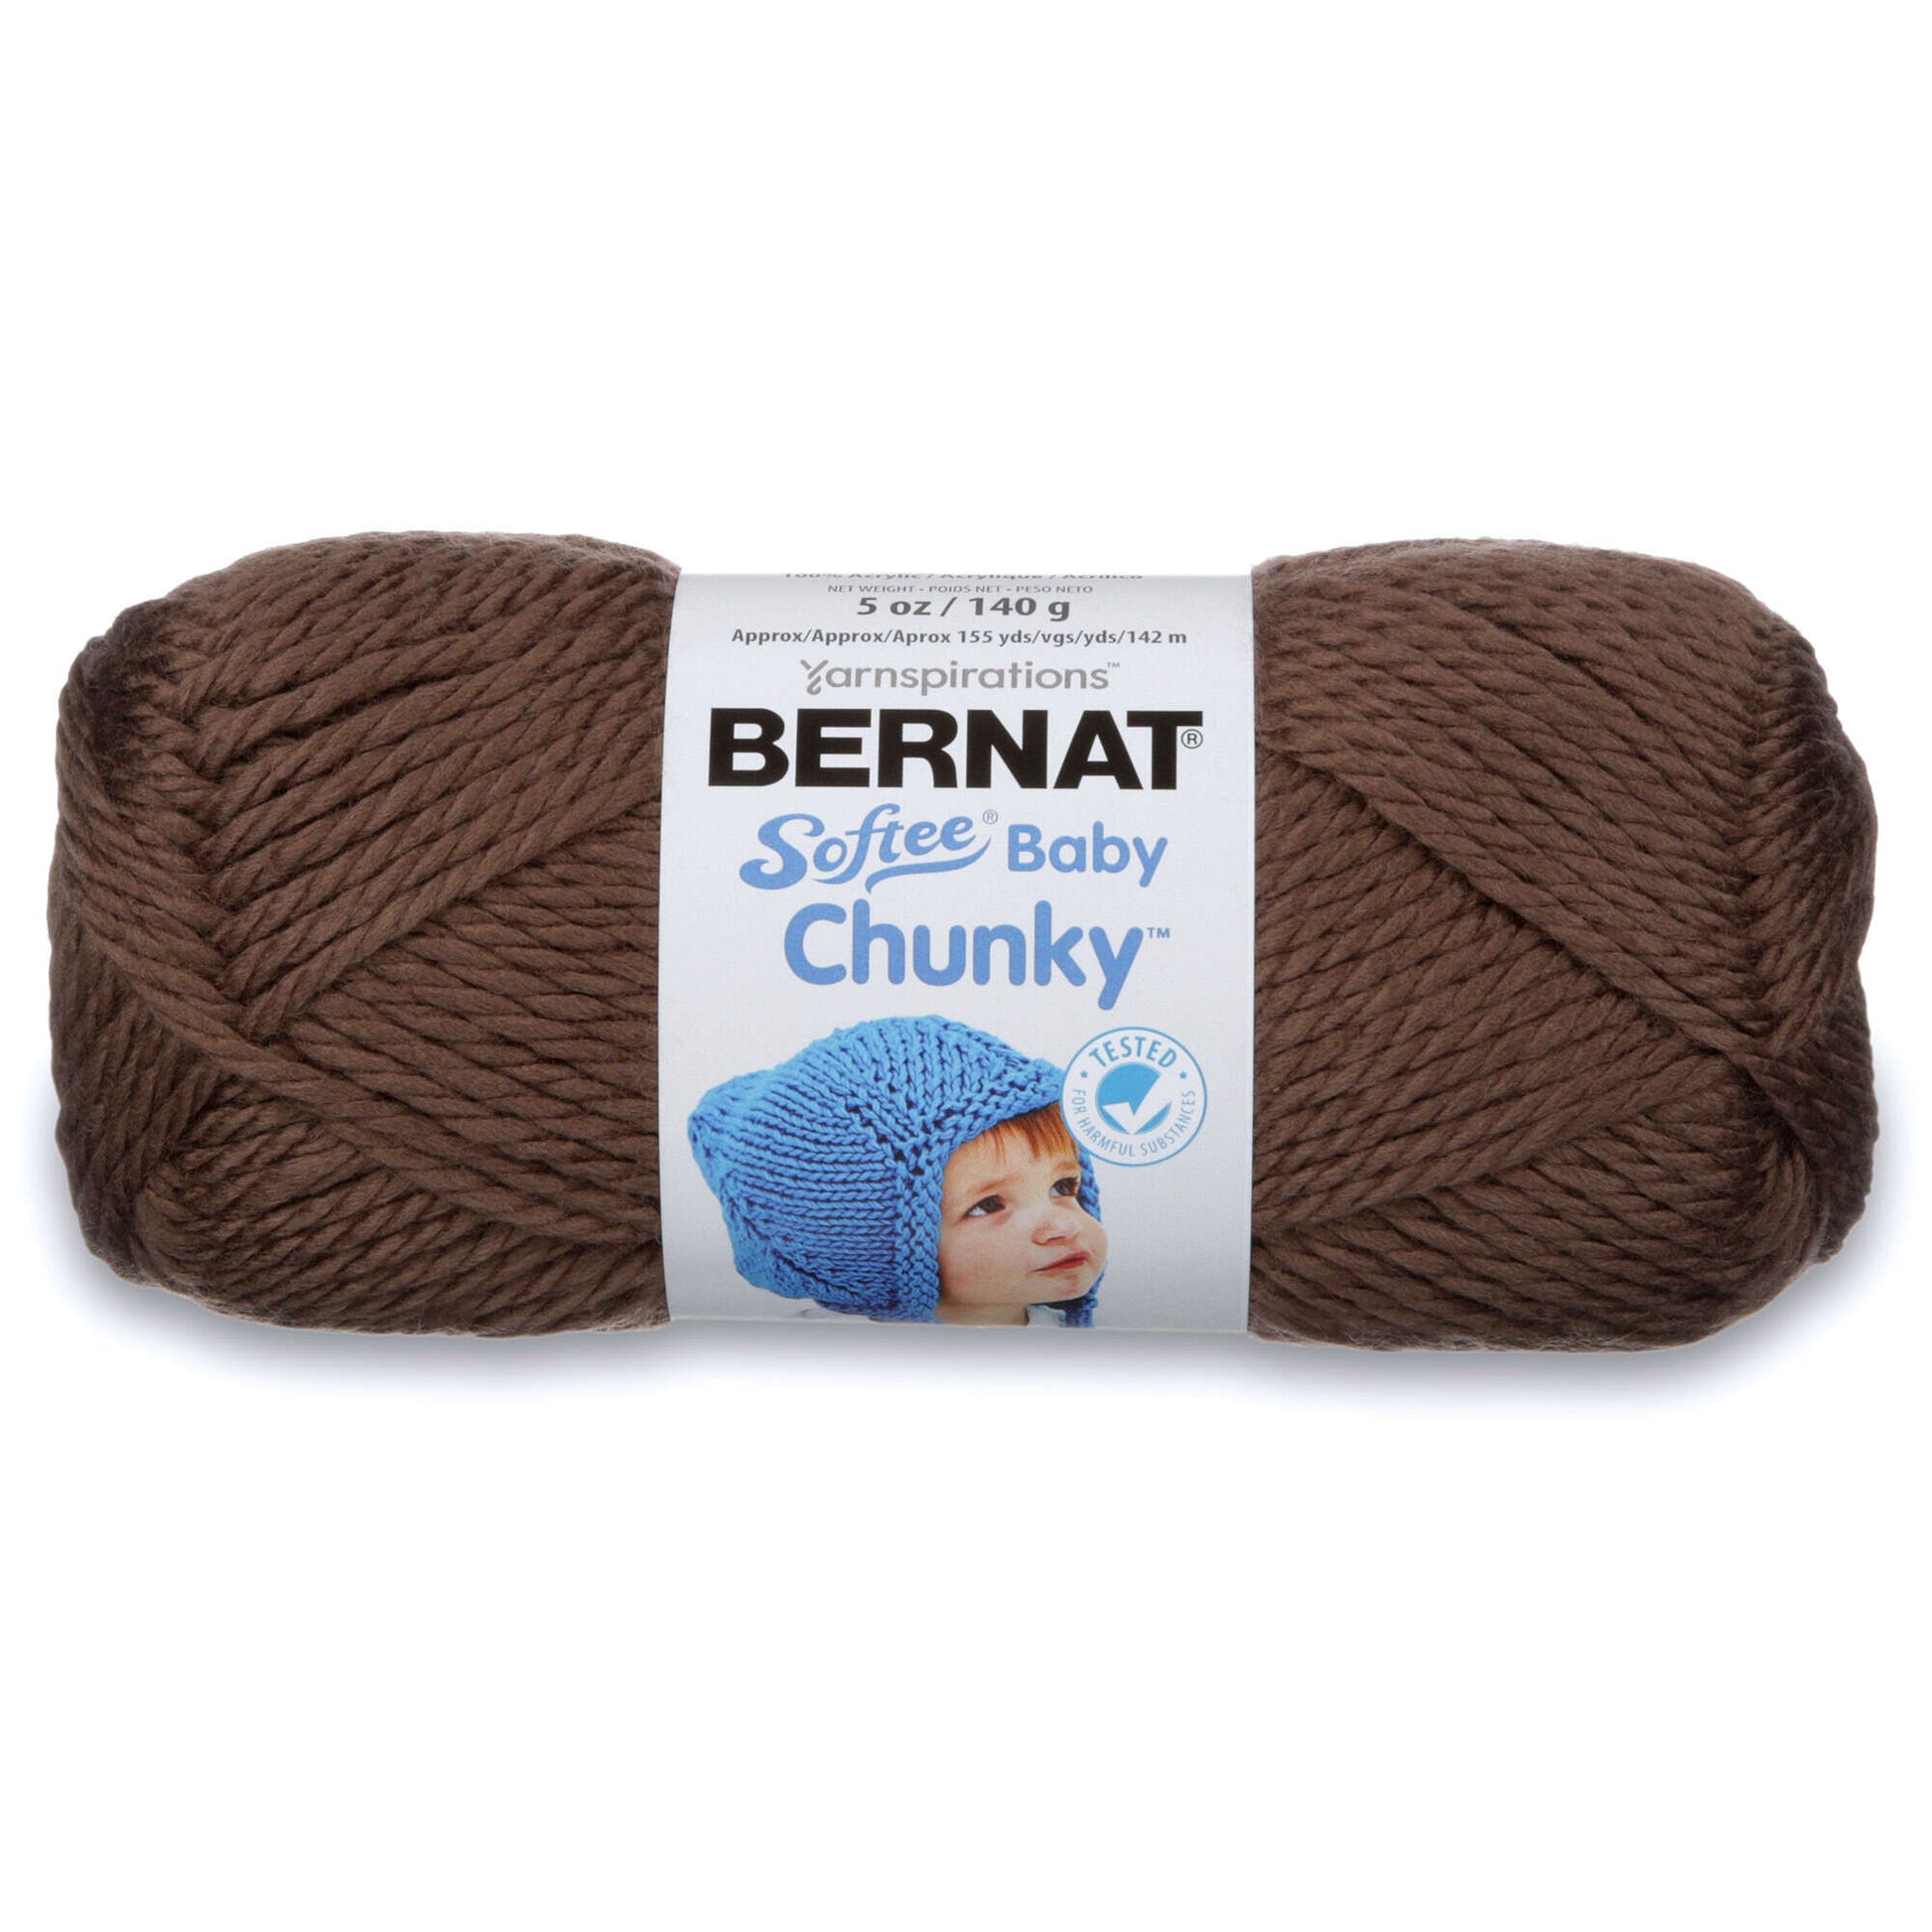 Bernat Softee Baby Chunky Yarn - Discontinued Shades